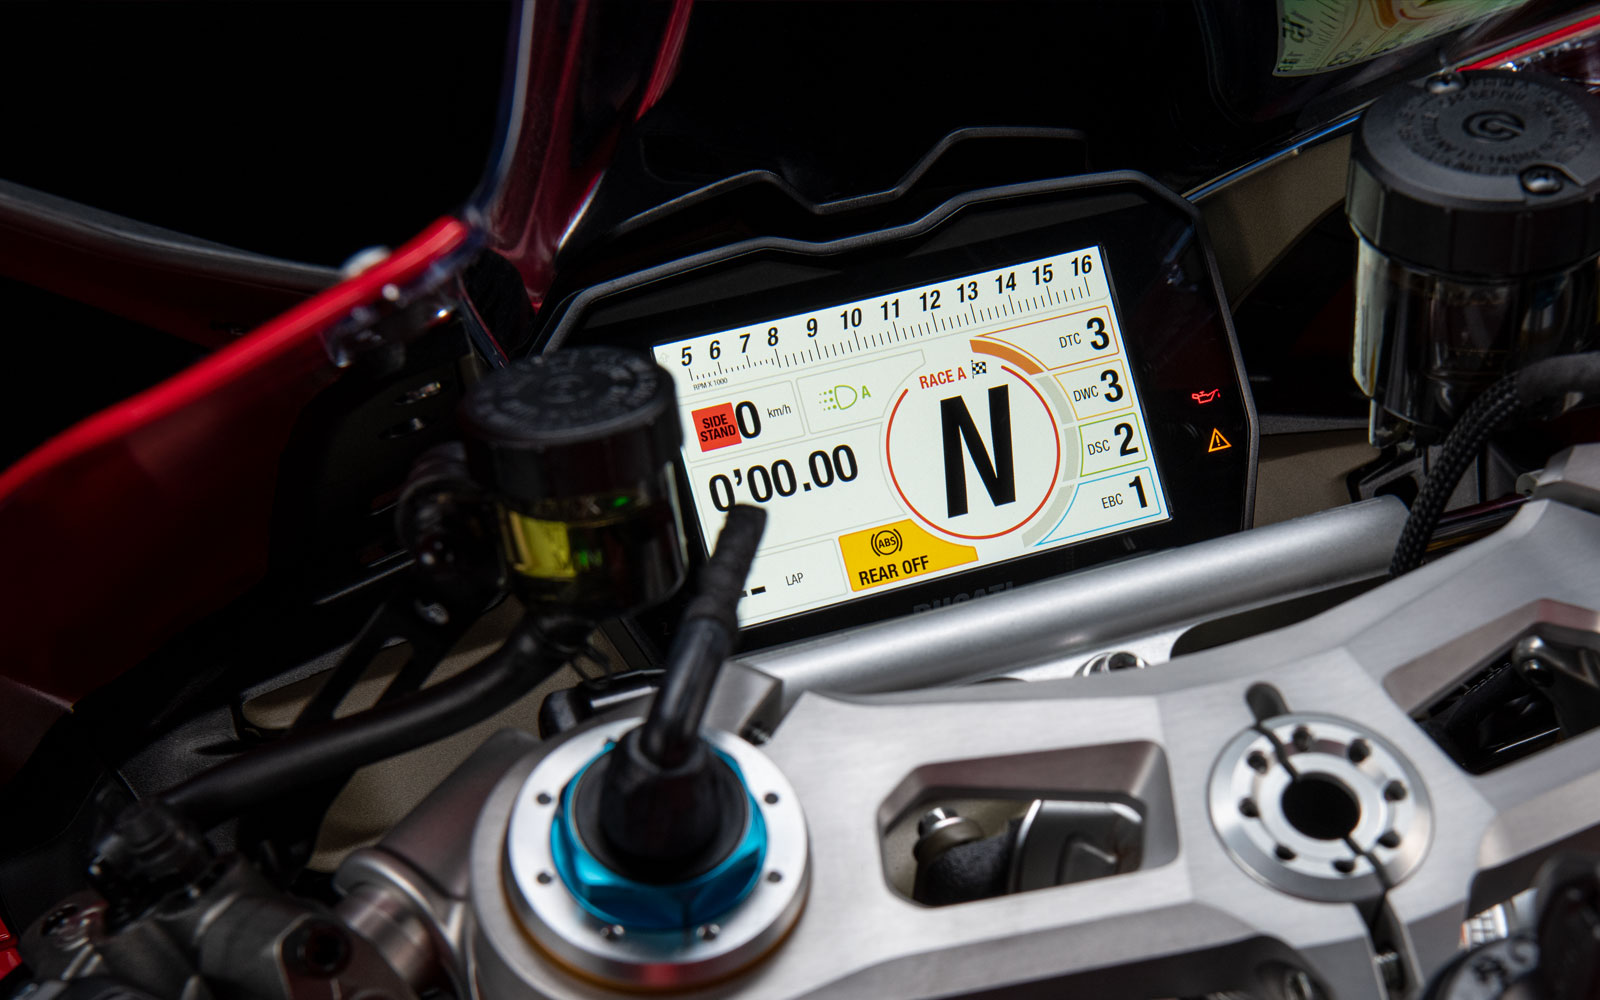 Vidéo : Première moto radiocommandé avec wheeling et drift au monde, la  Ducati V4 S - France Stunt Media